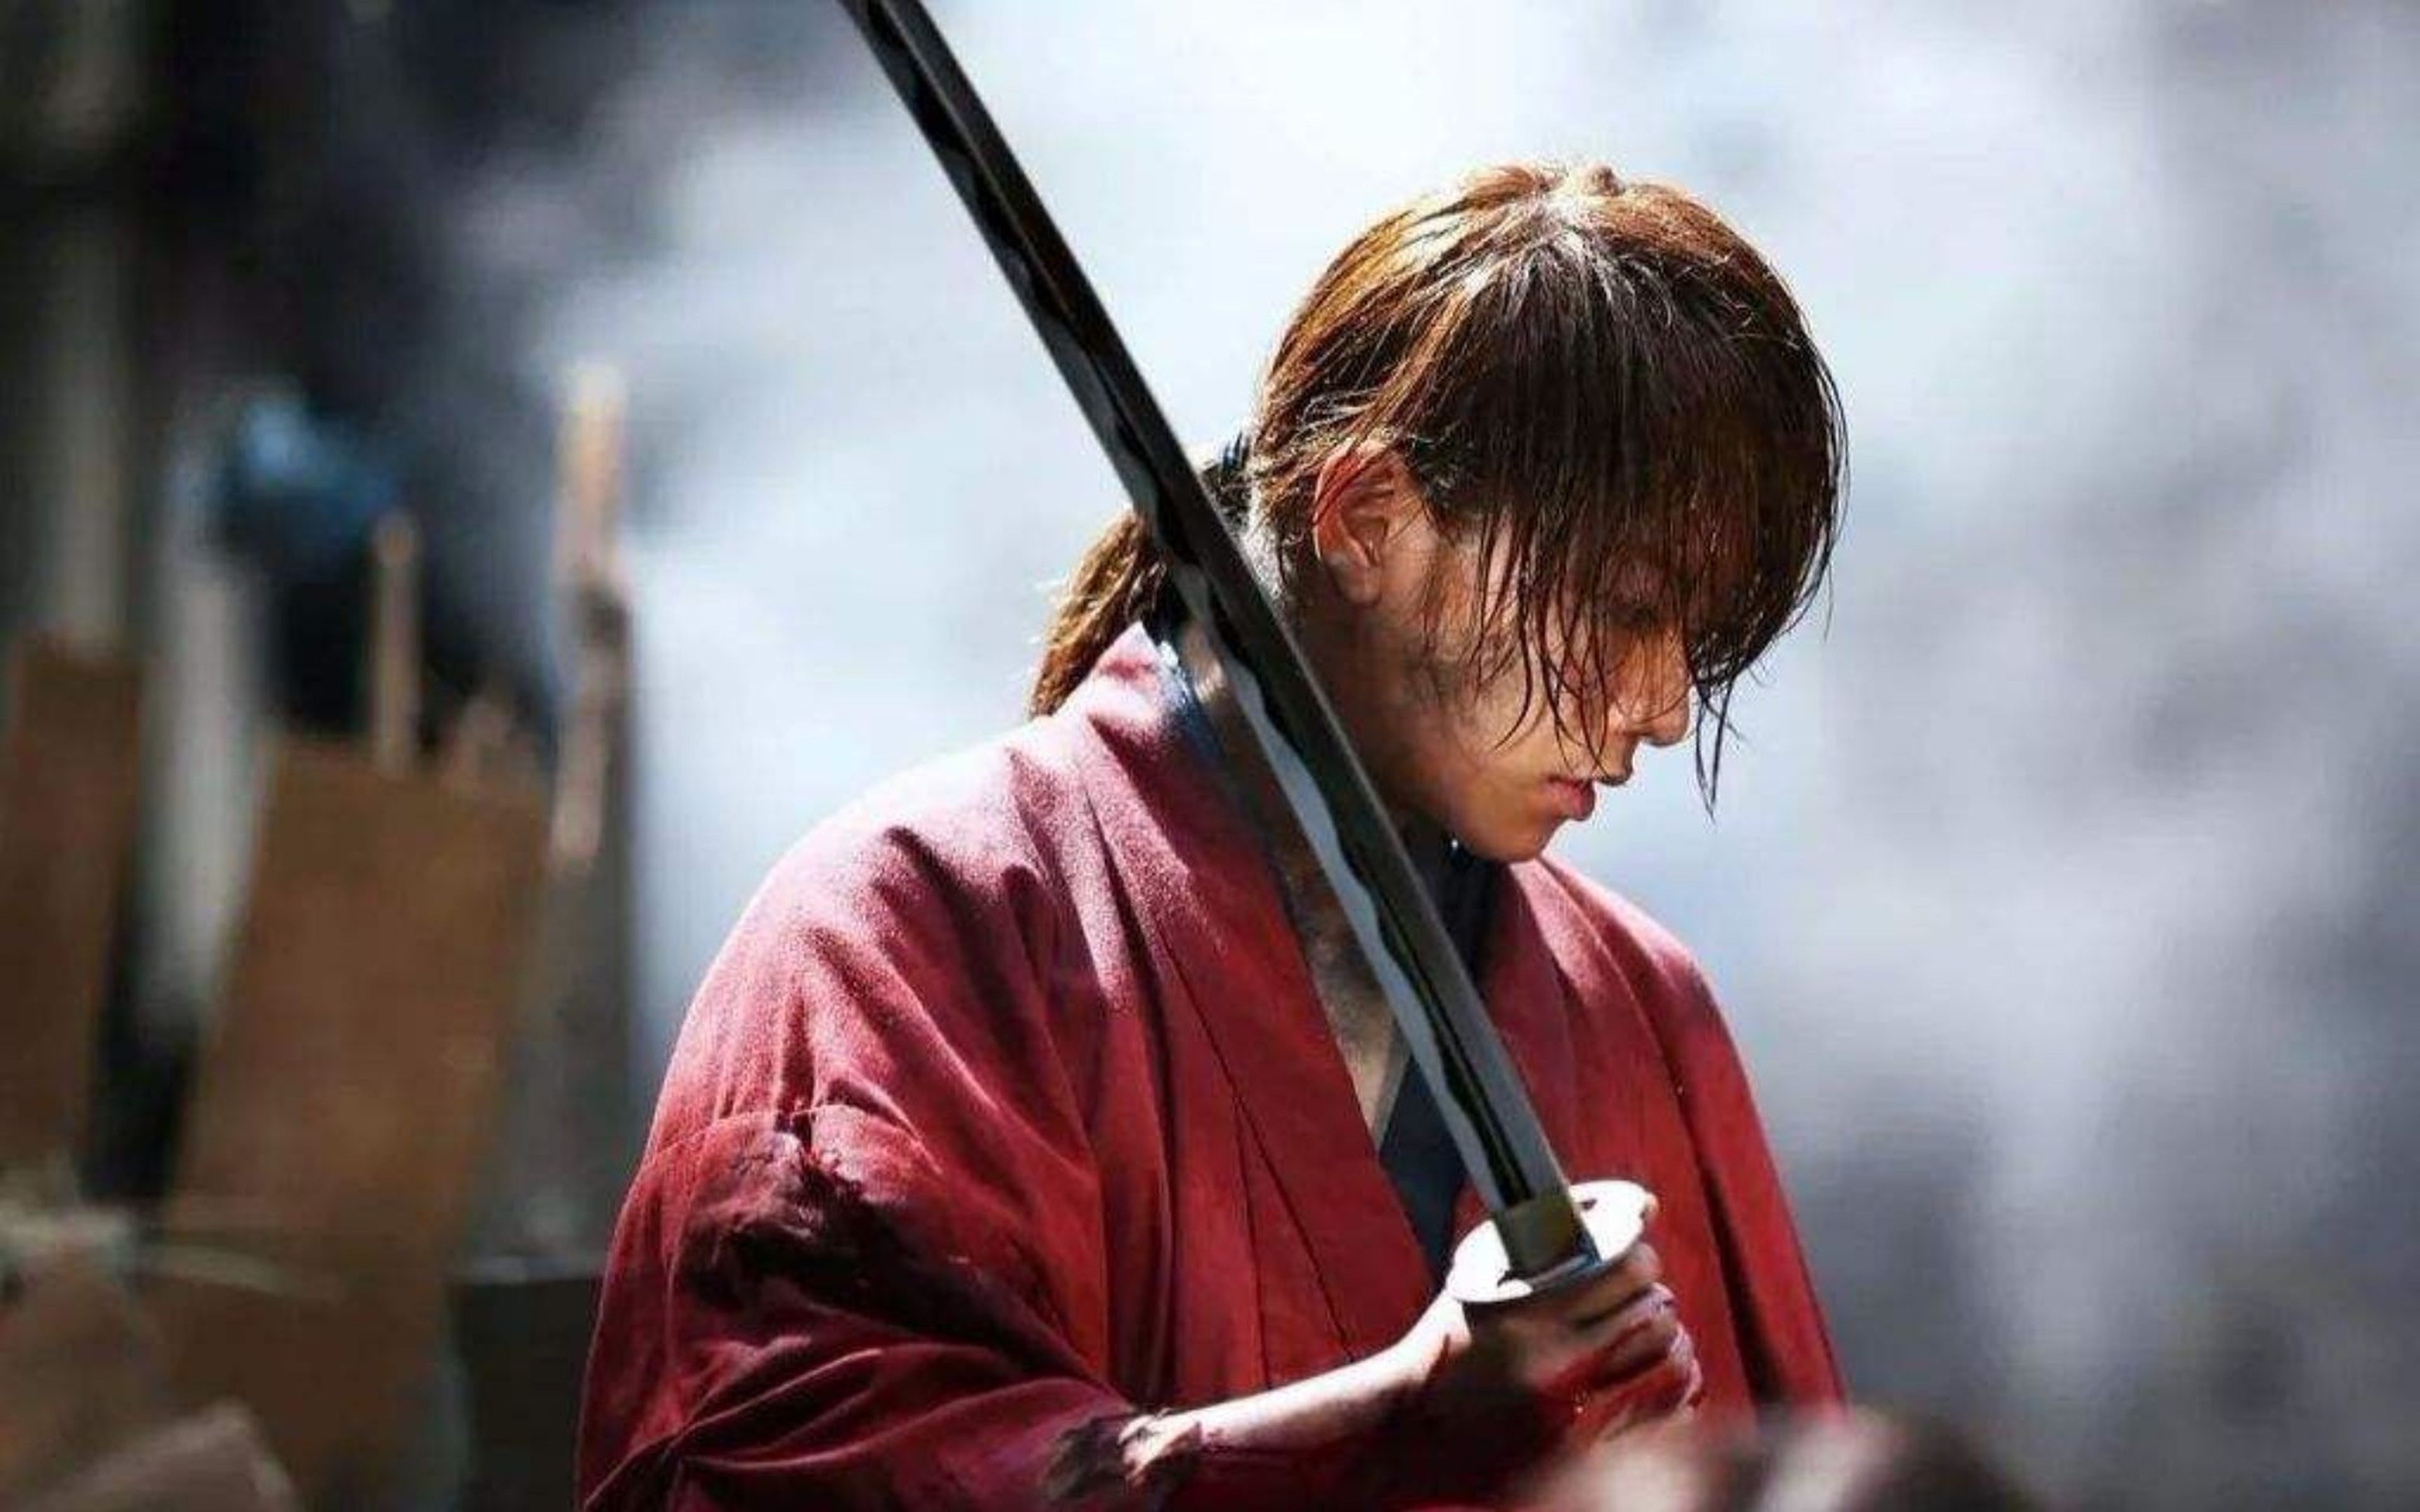 Kenshin, el guerrero samurái: El origen